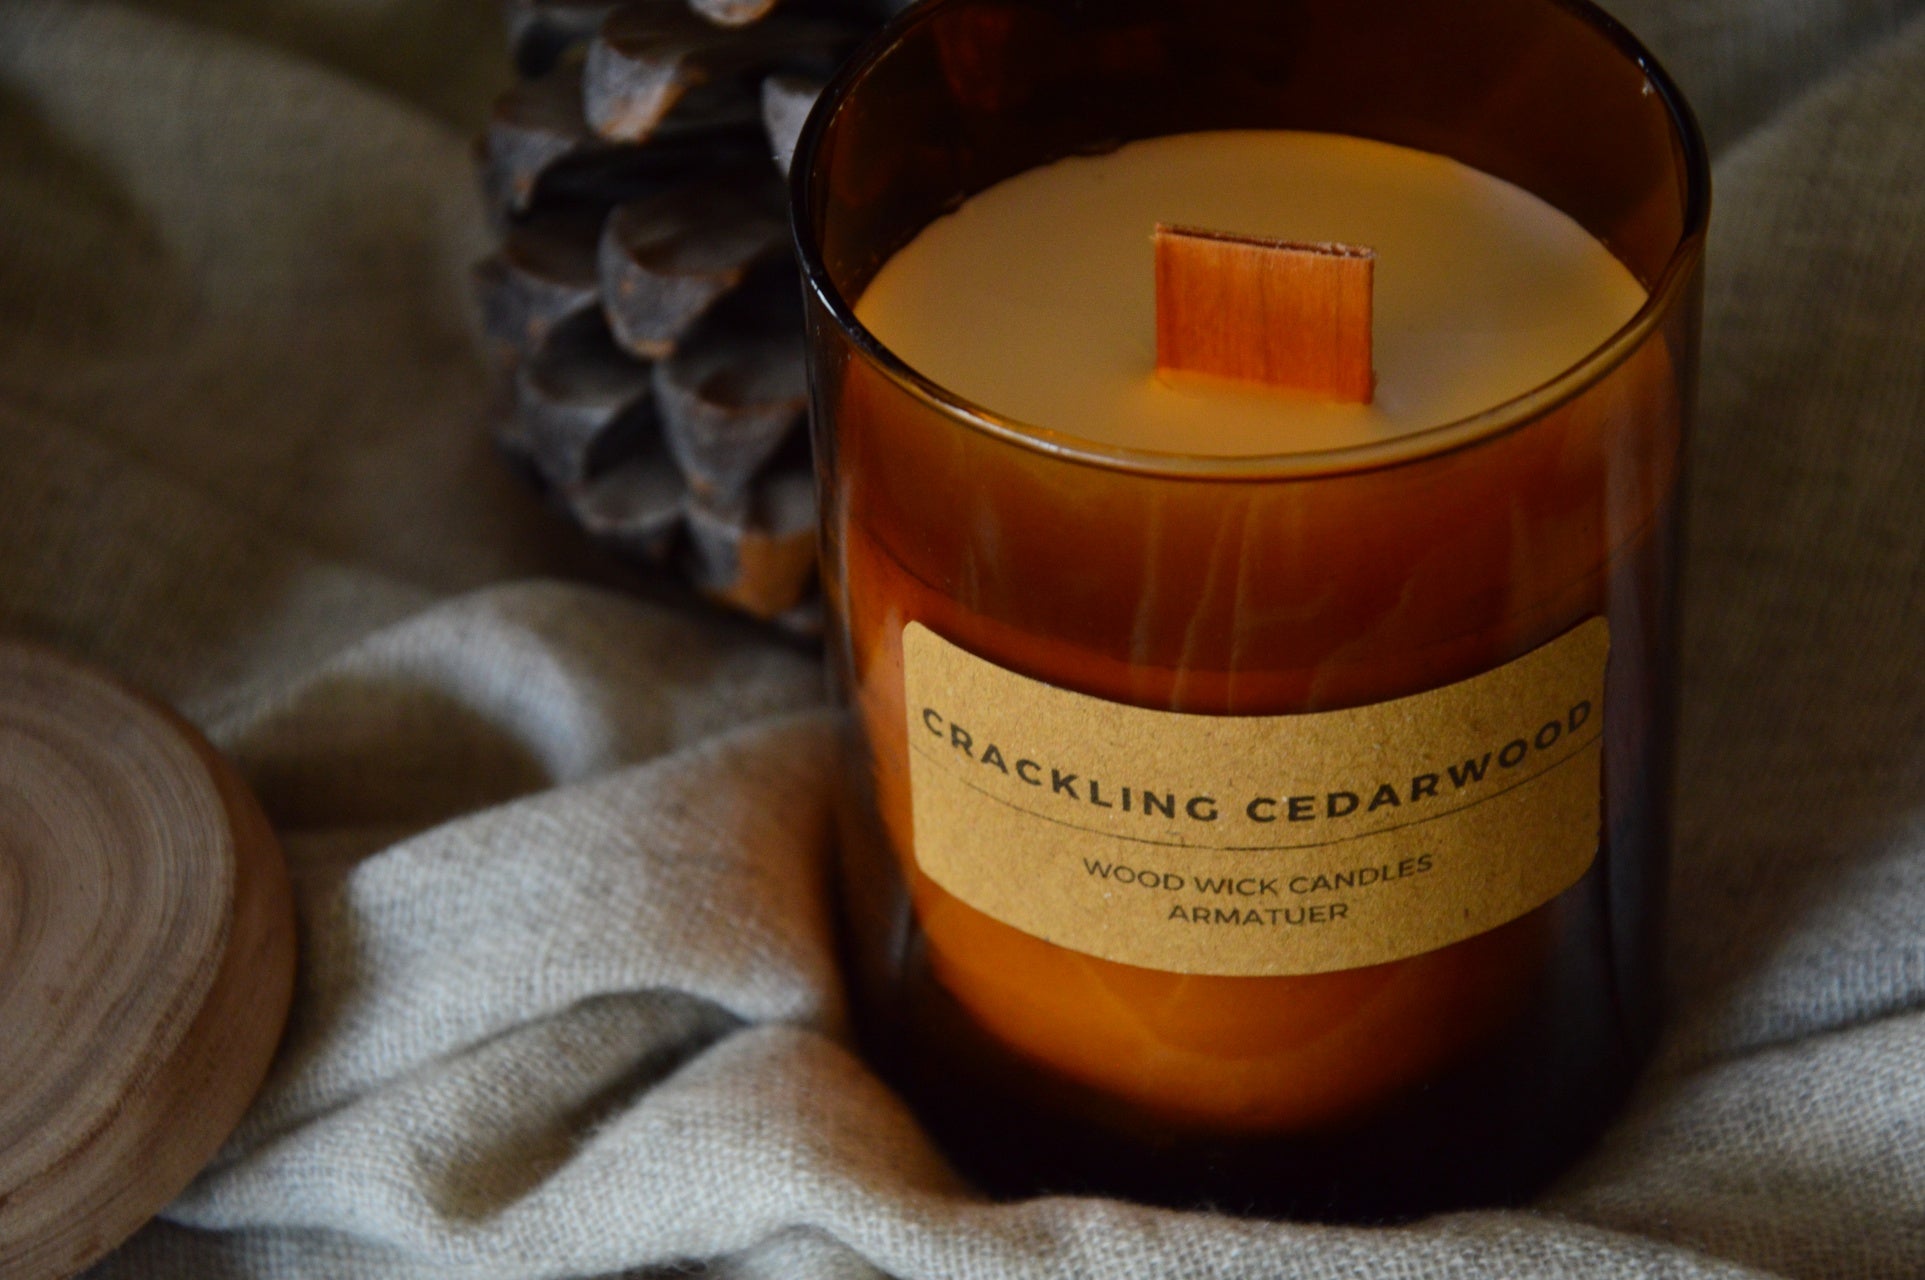 Crackling Cedarwood | Wood Wick Candle Votive